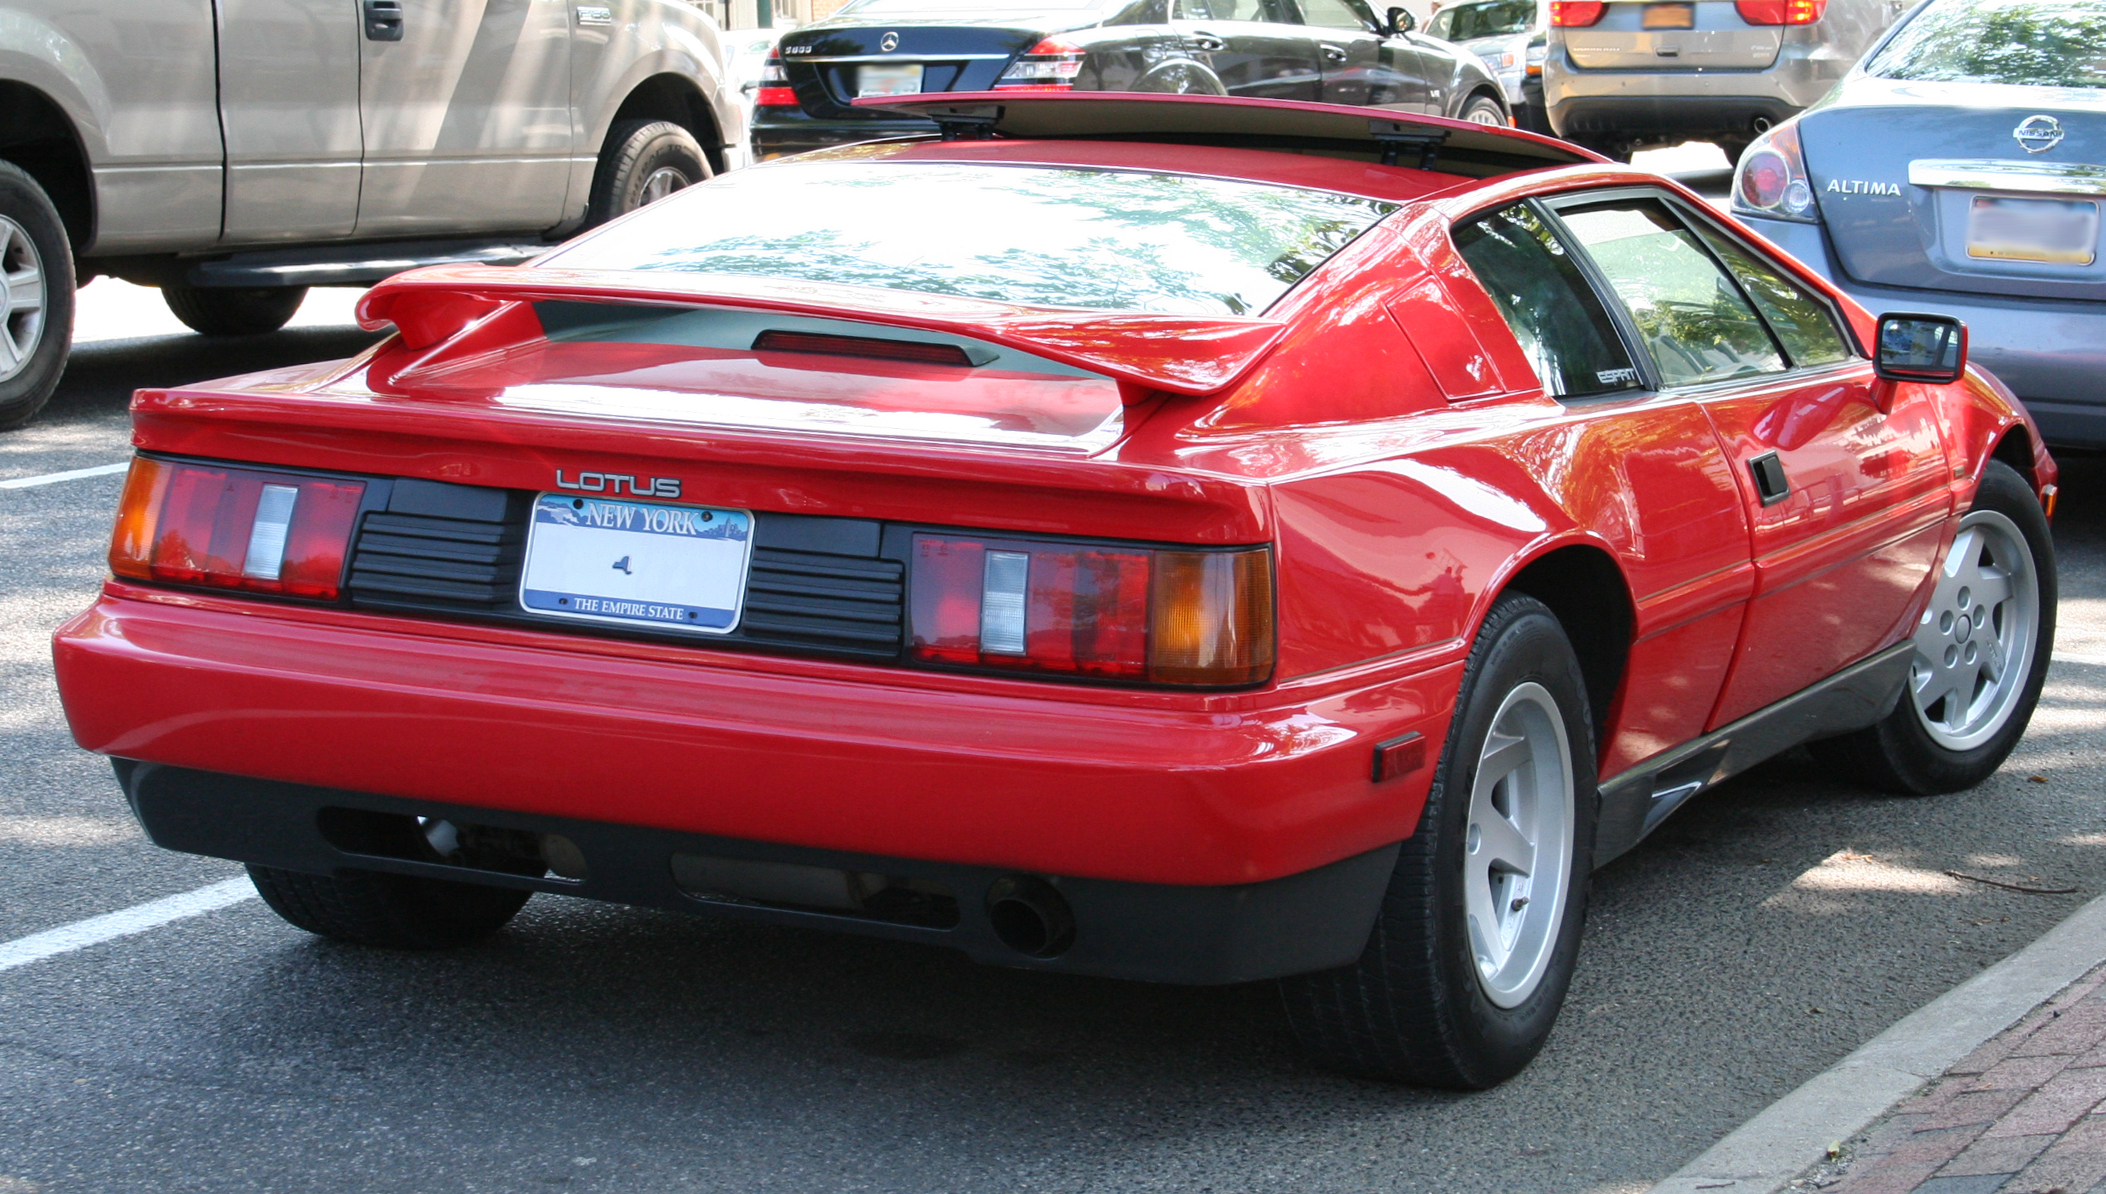 Dossier: 1988 Lotus Esprit Turbo US rr.JPG - Wikimedia Commons